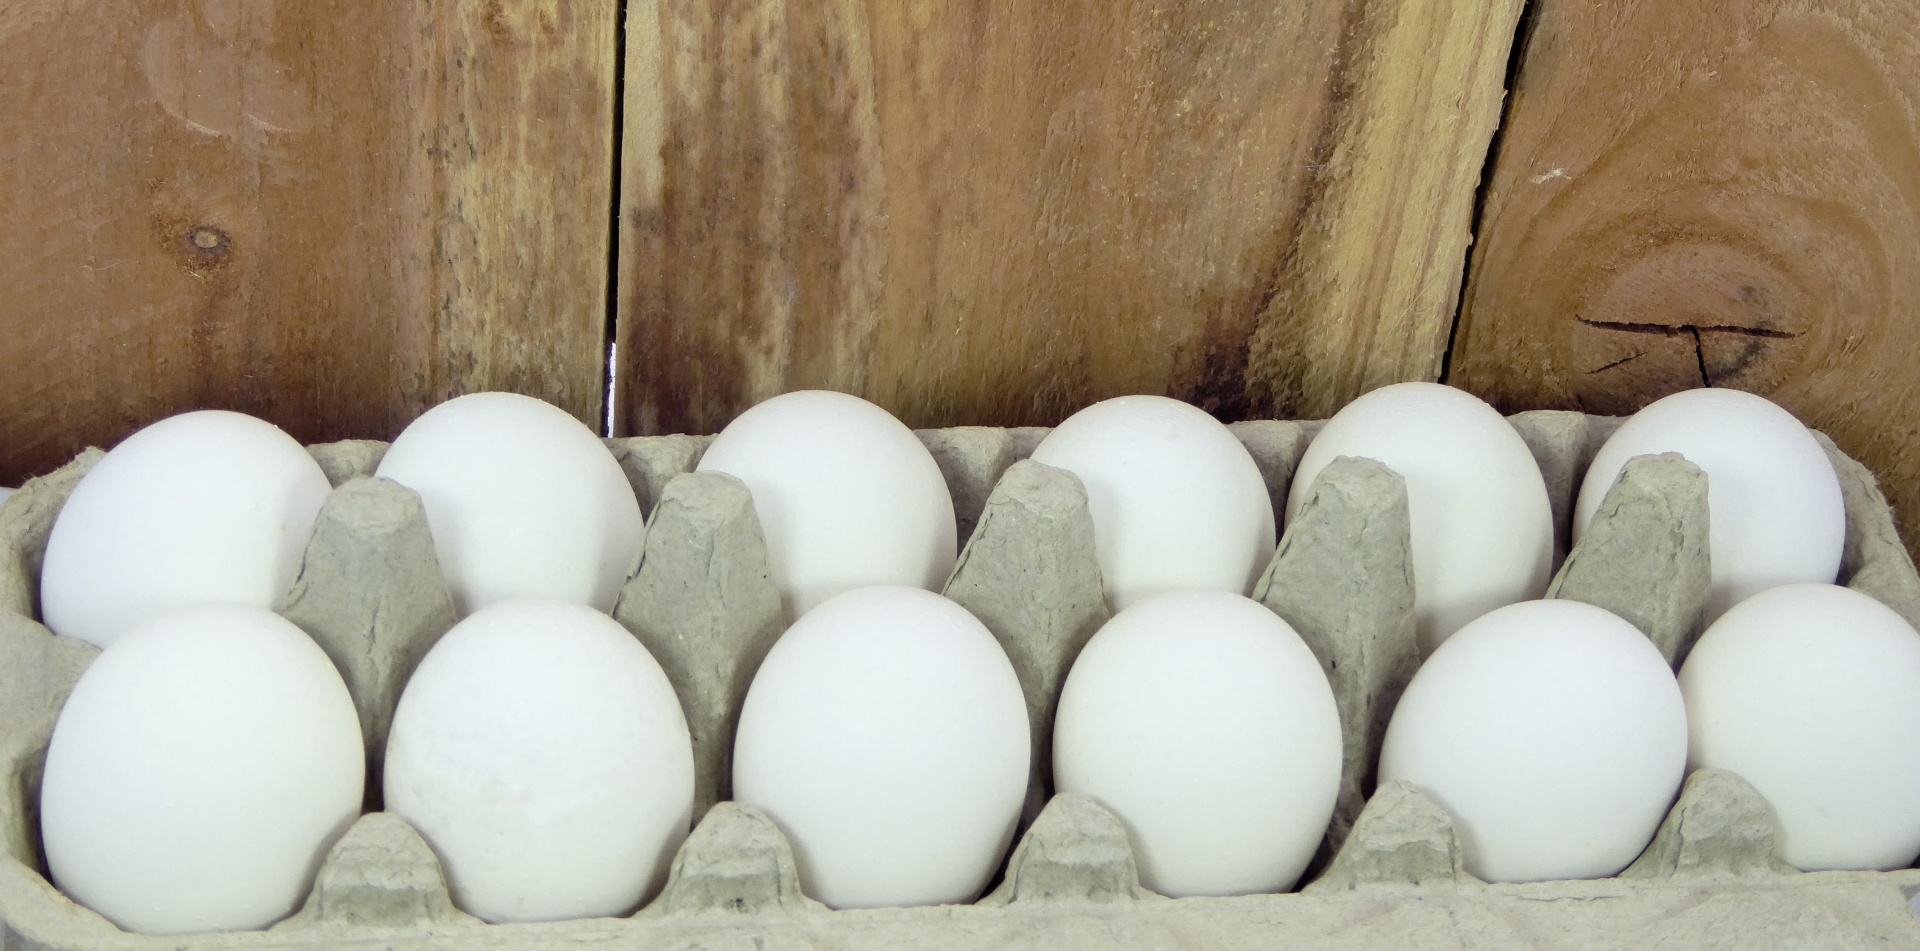 farm fresh dozen eggs with wooden fence in background